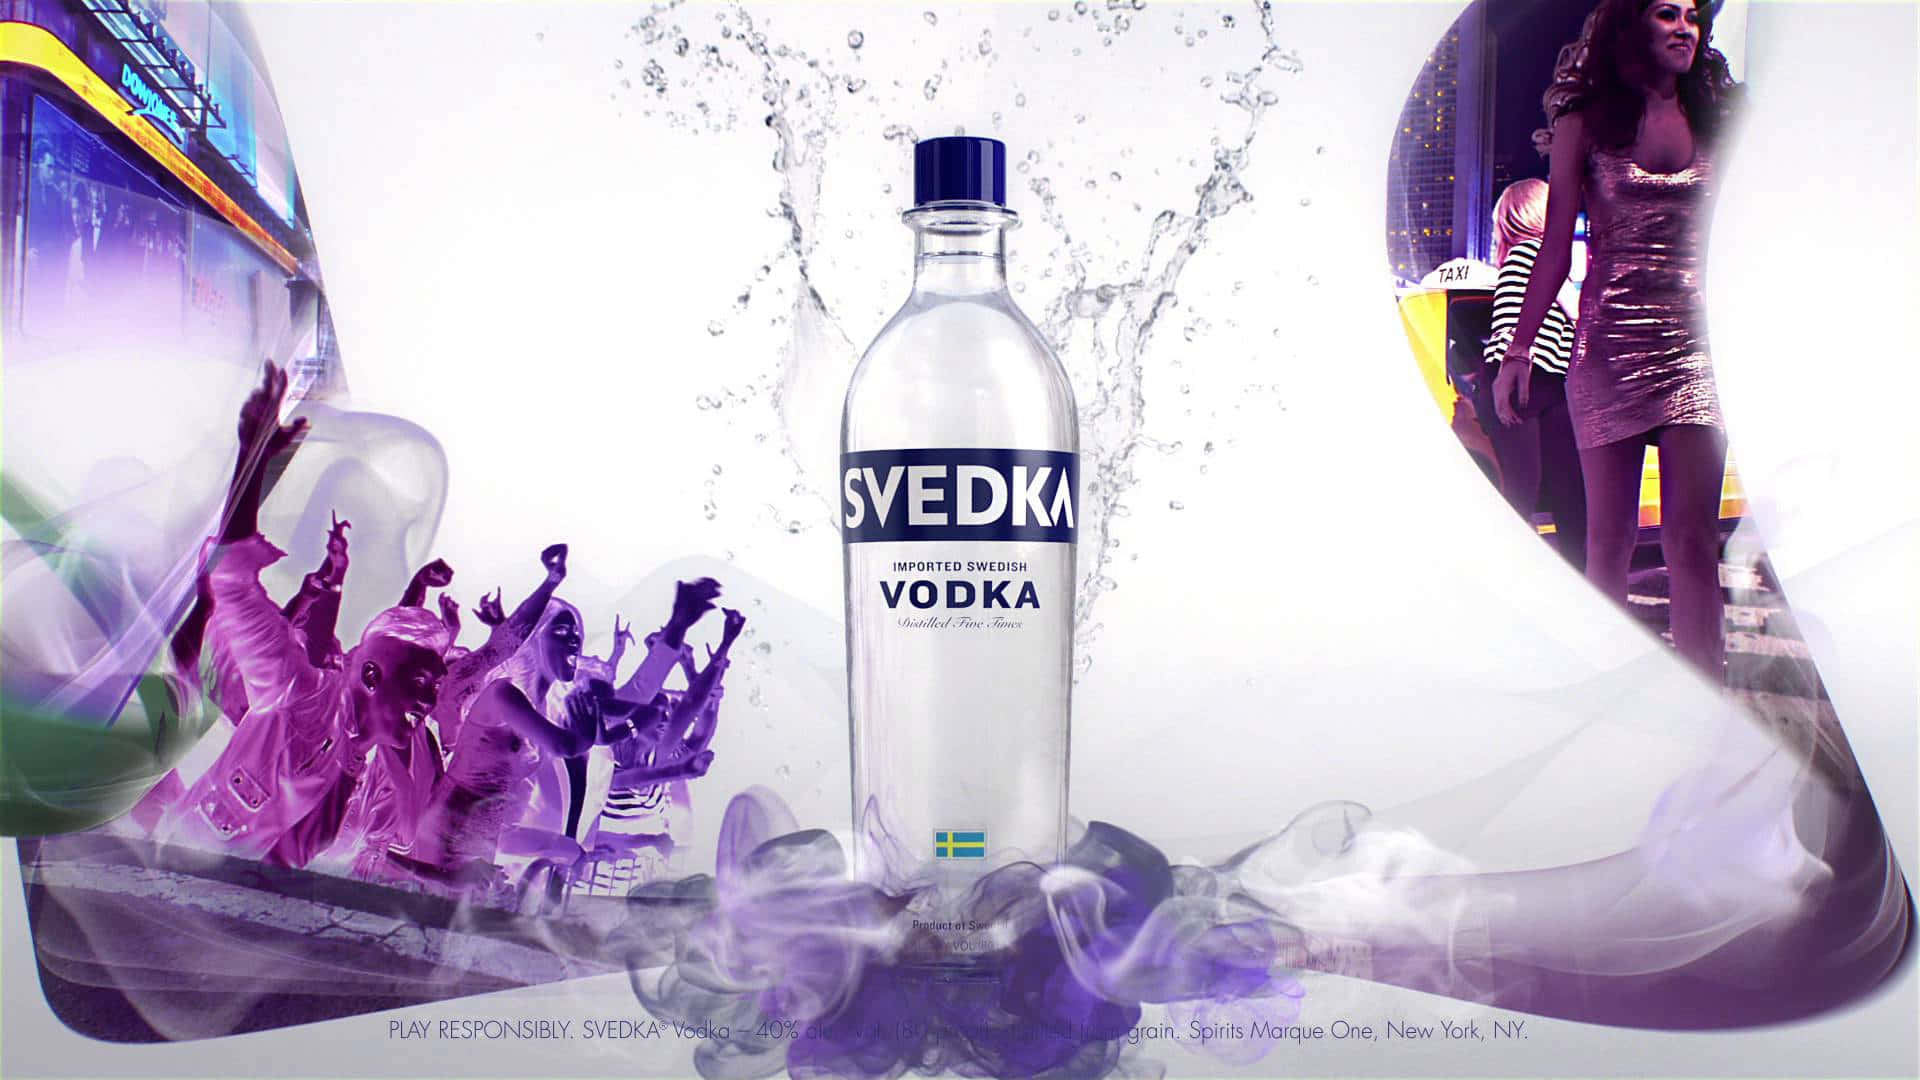 Svedka Swedish Vodka Purple Themed Digital Art Poster Wallpaper